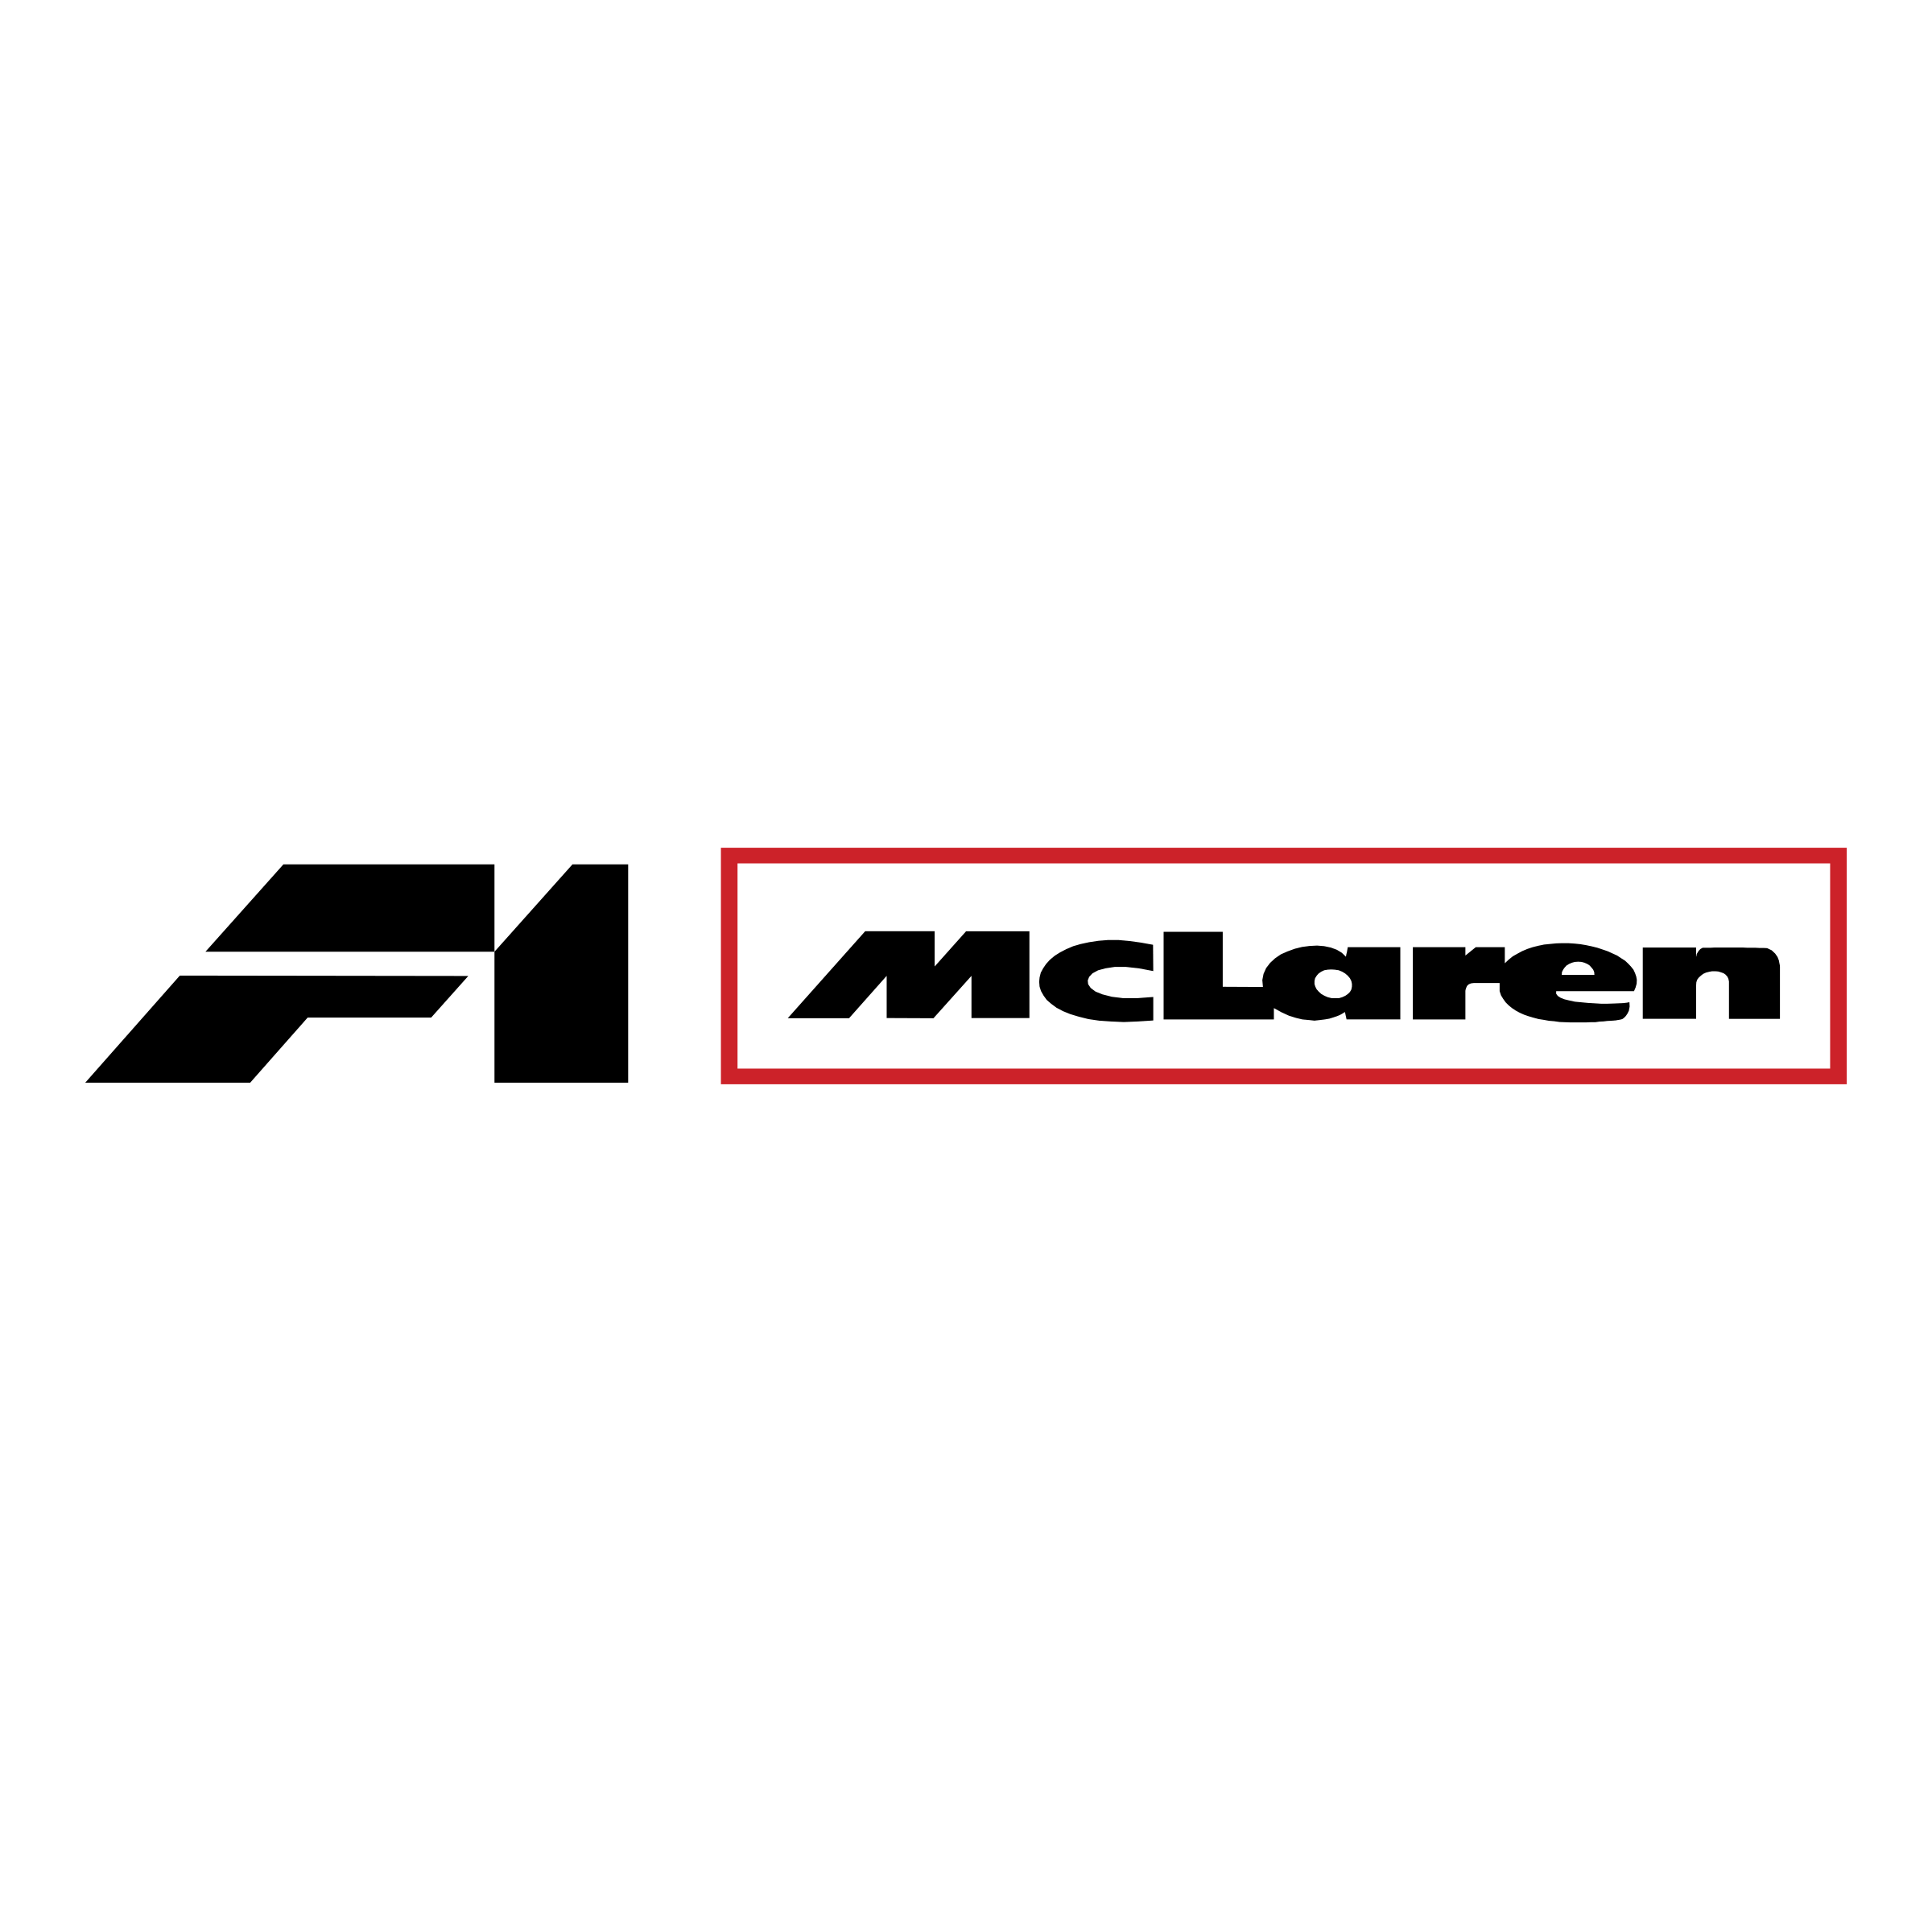 McLaren F1 Logo - McLaren F1 Logo PNG Transparent & SVG Vector - Freebie Supply